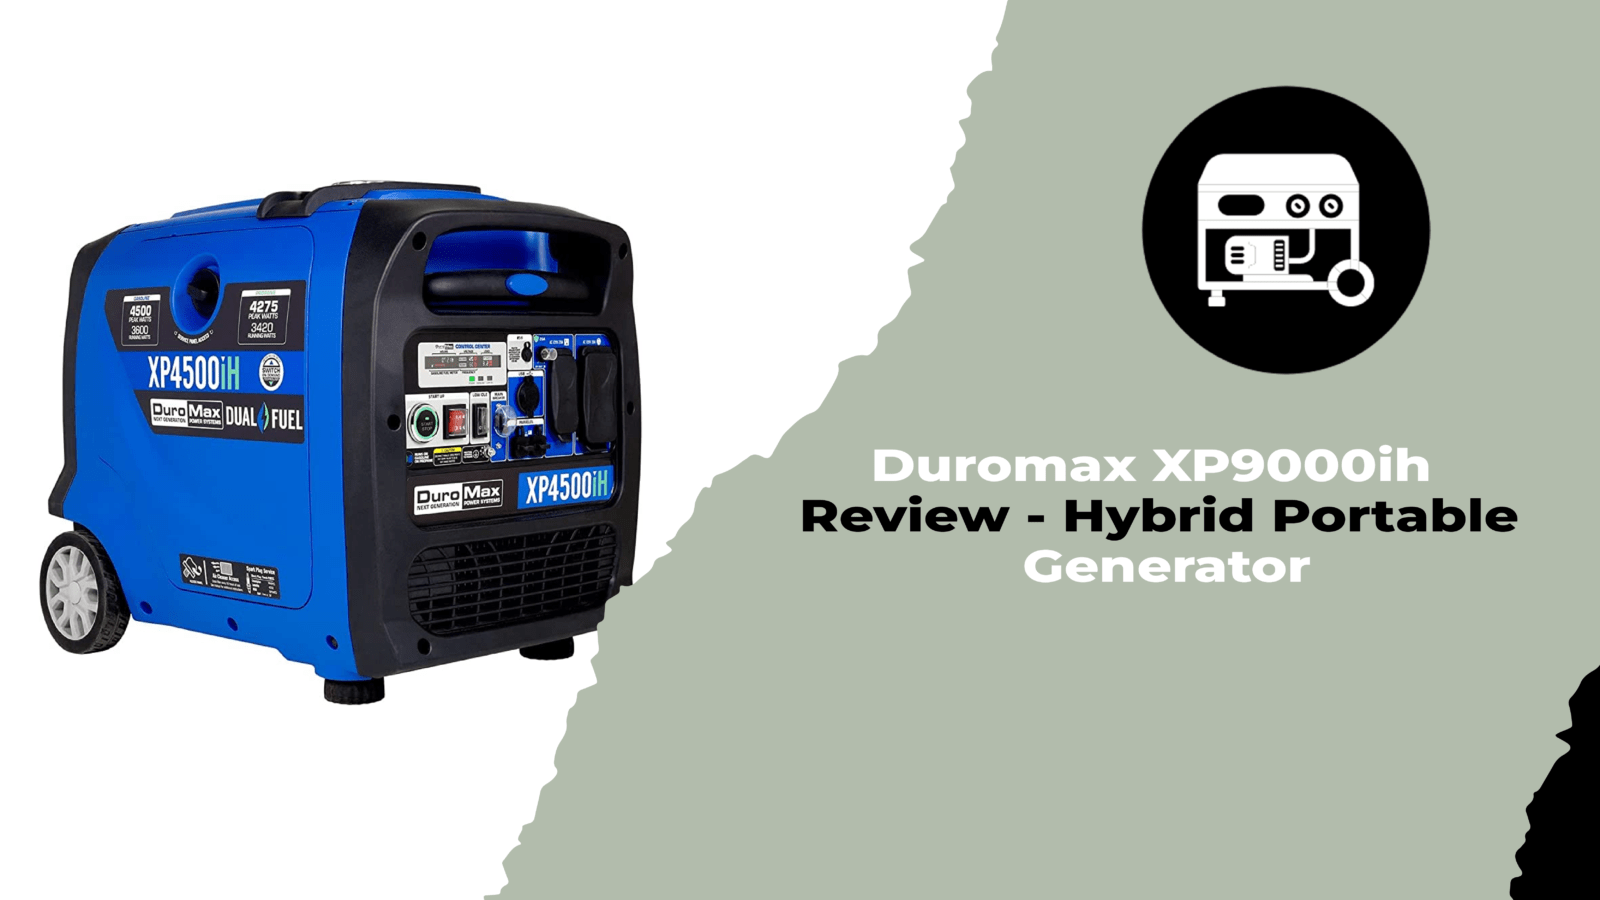 Duromax XP9000ih Review - Hybrid Portable Generator